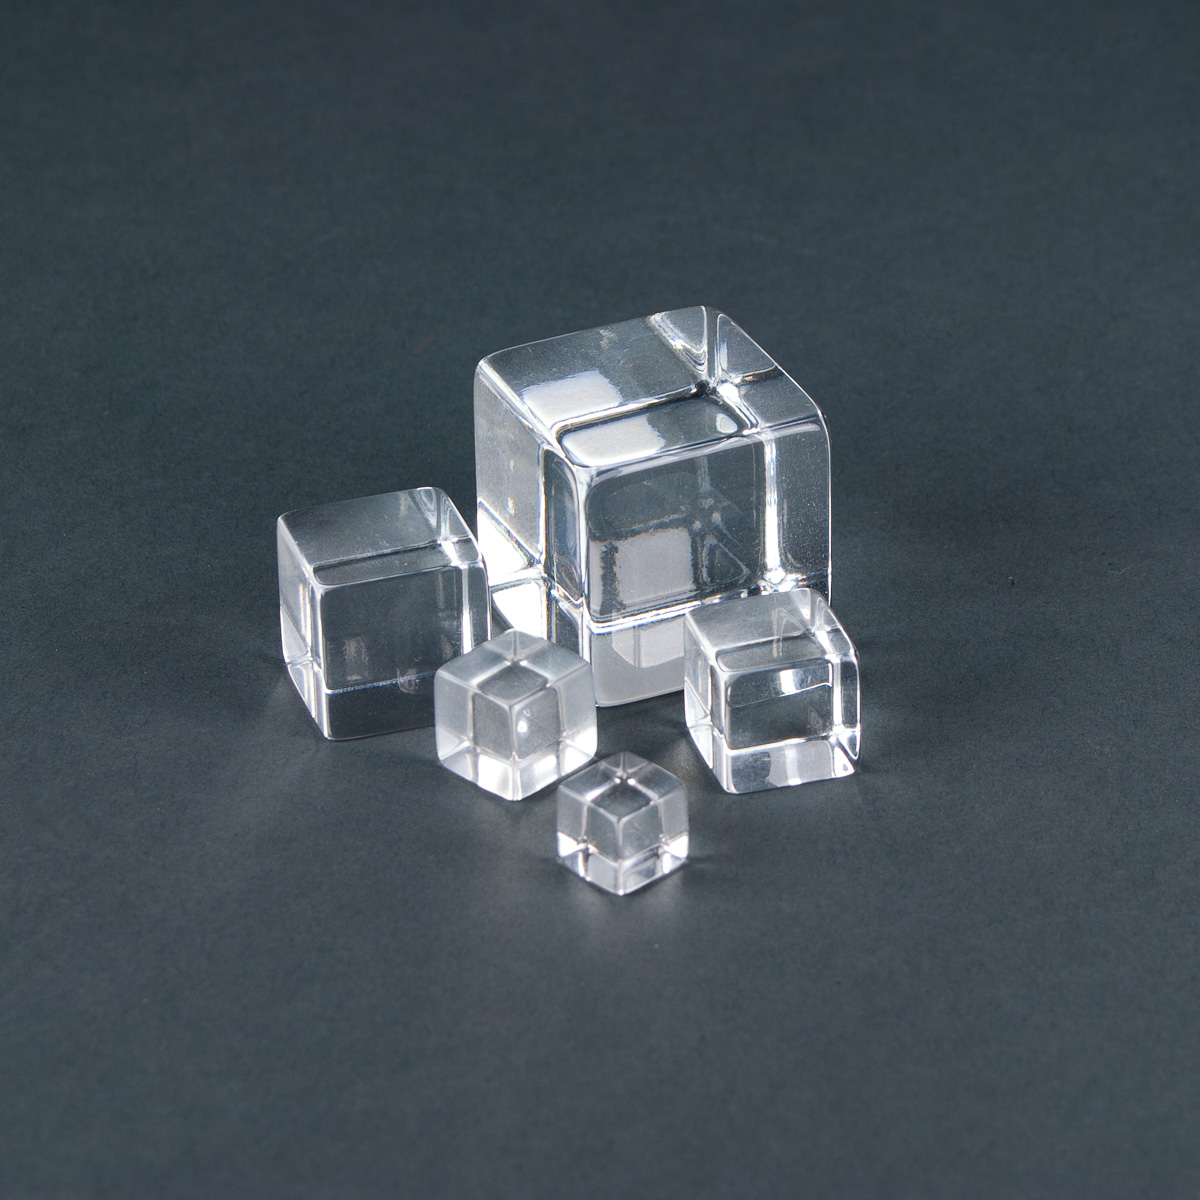 Acrylic cubes